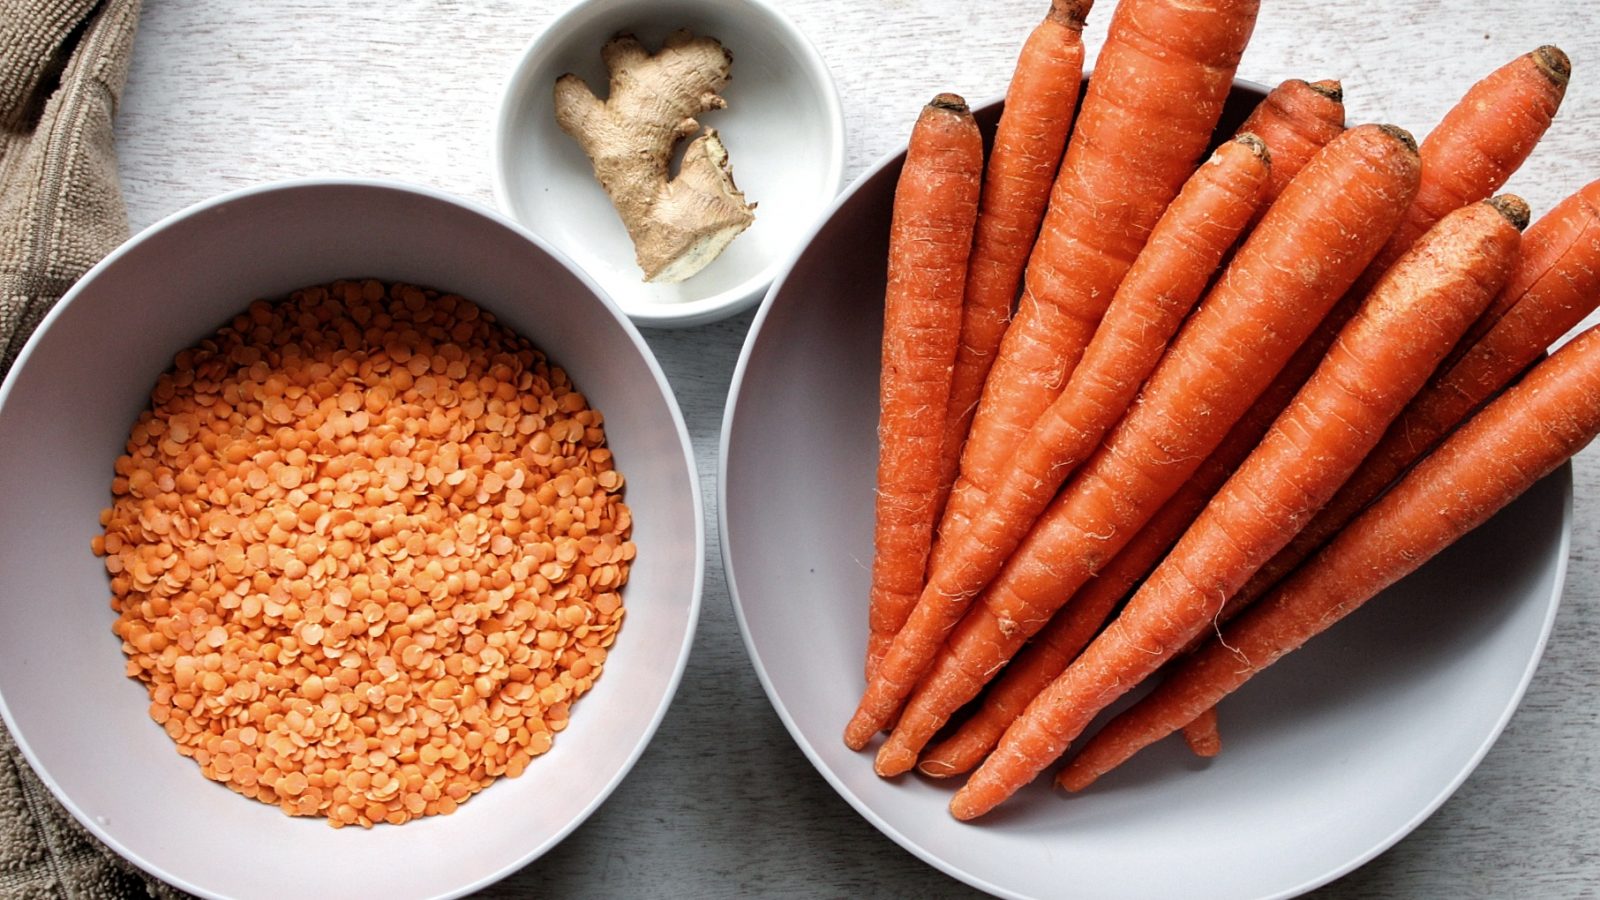 Red split lentils, ginger, whole carrots